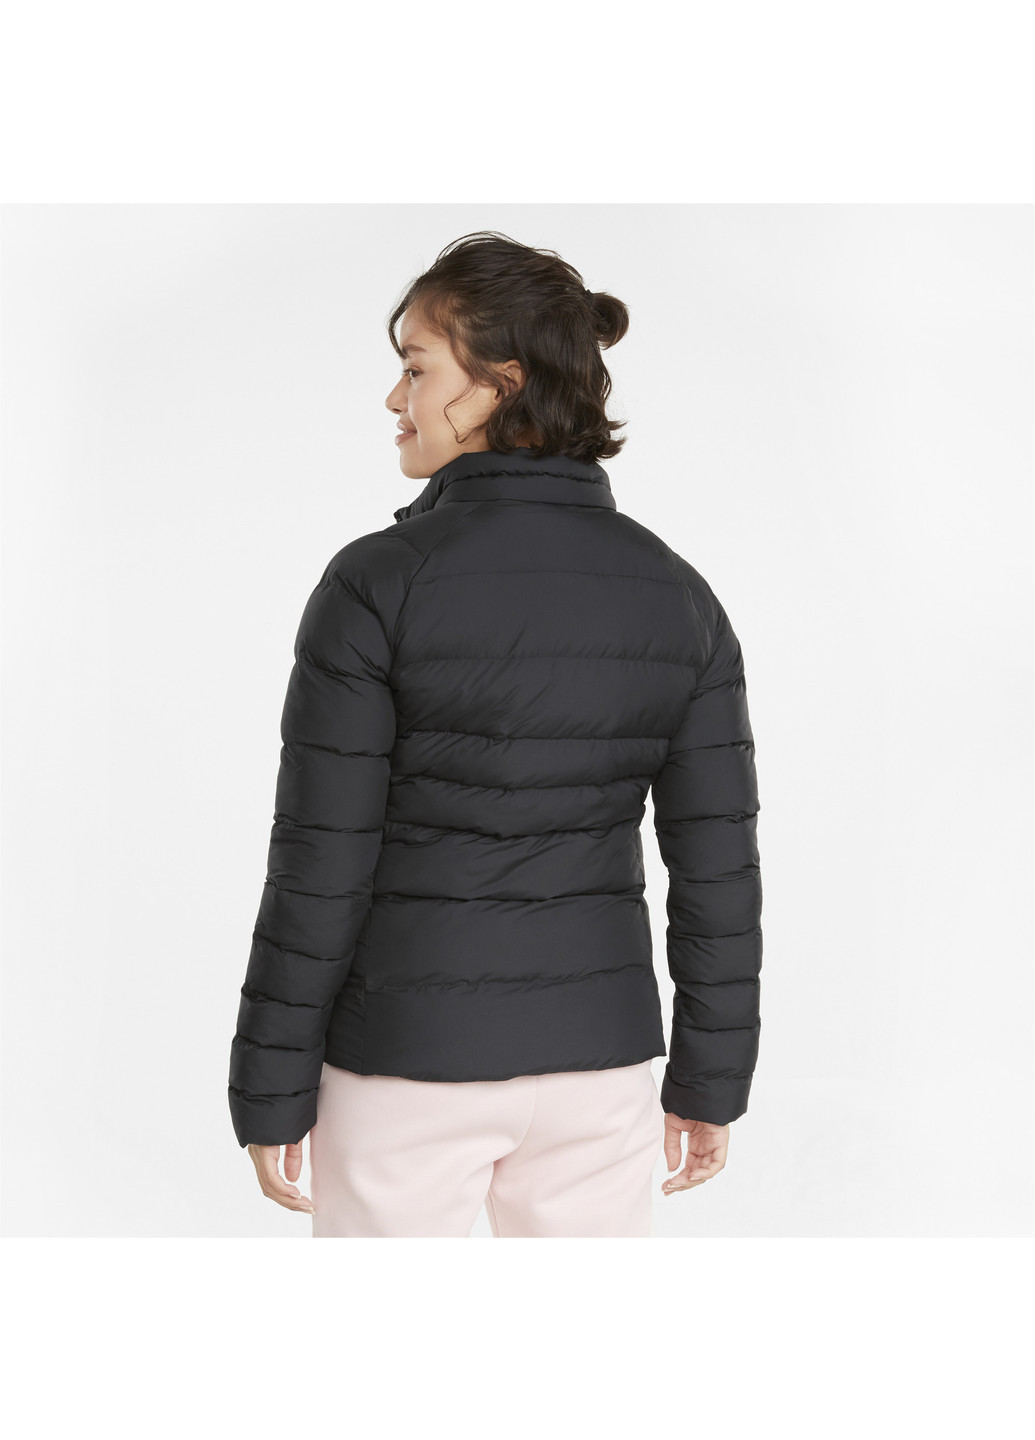 Черная демисезонная куртка warmcell lightweight women's jacket Puma